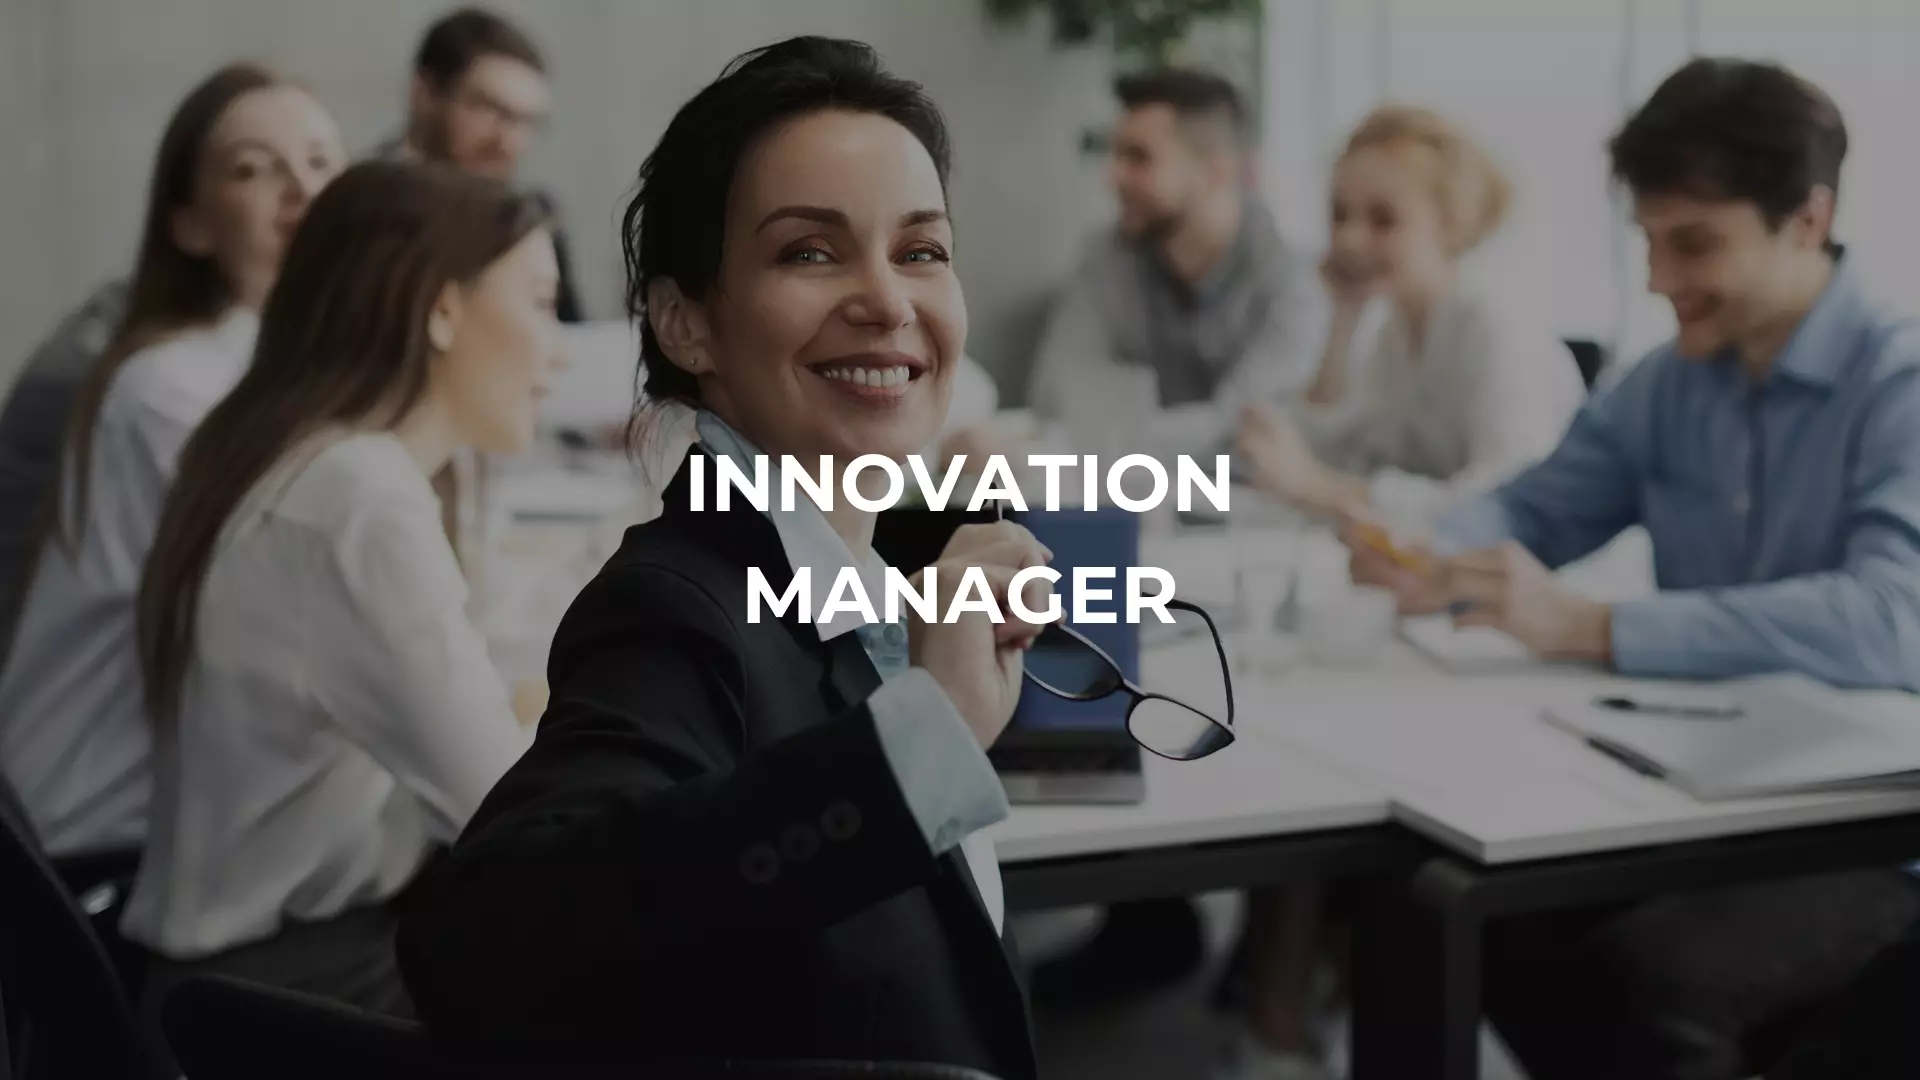 corso-innovation-manager